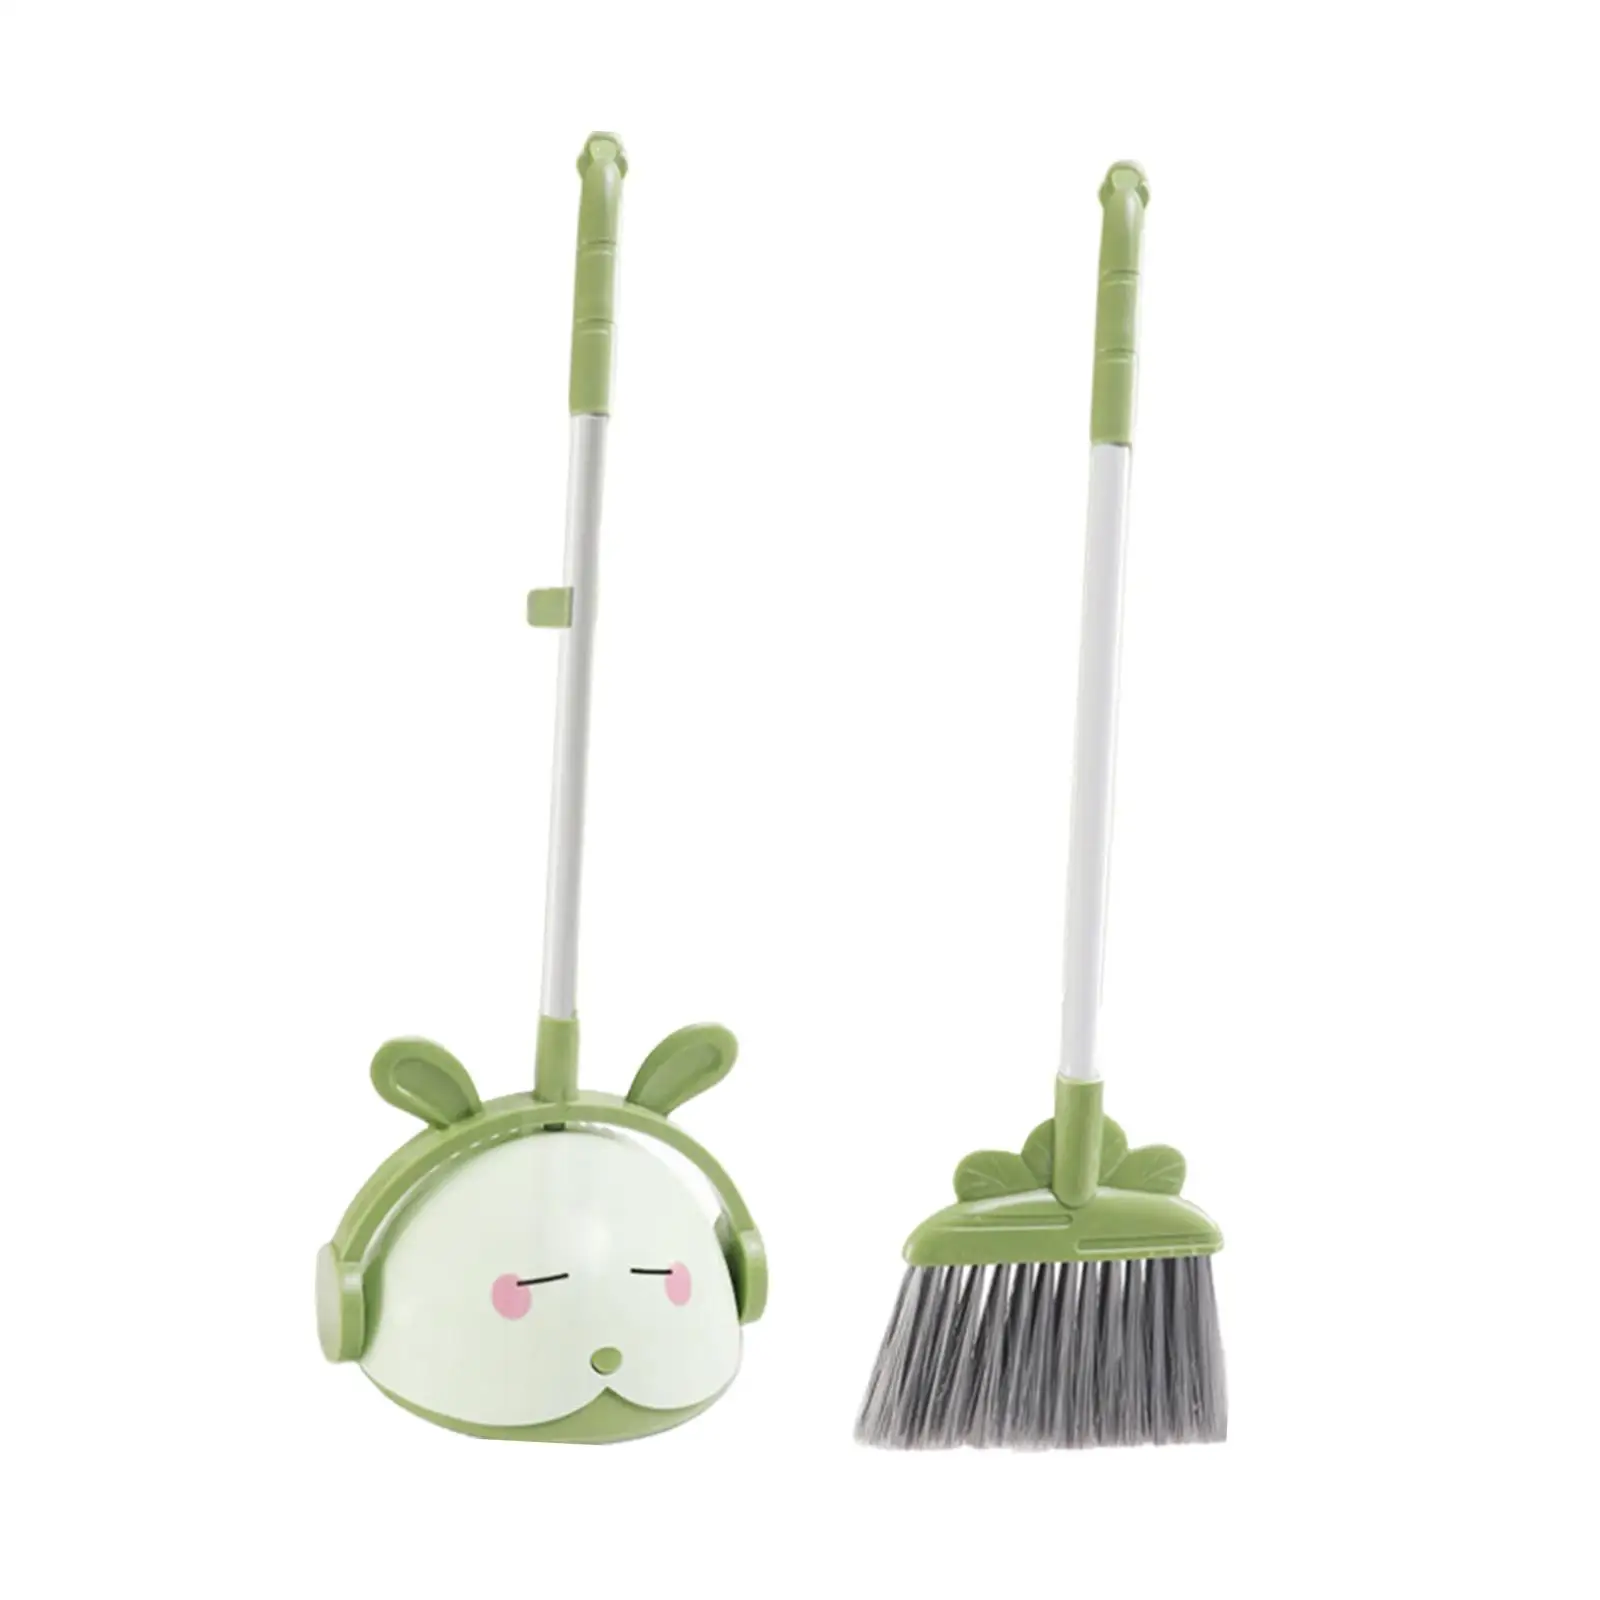 Kids Household Cleaning Toys Birthday Gifts Pretend Play Housekeeping Cleaning Tools for Preschool Kindergarten Kids Boys Girls